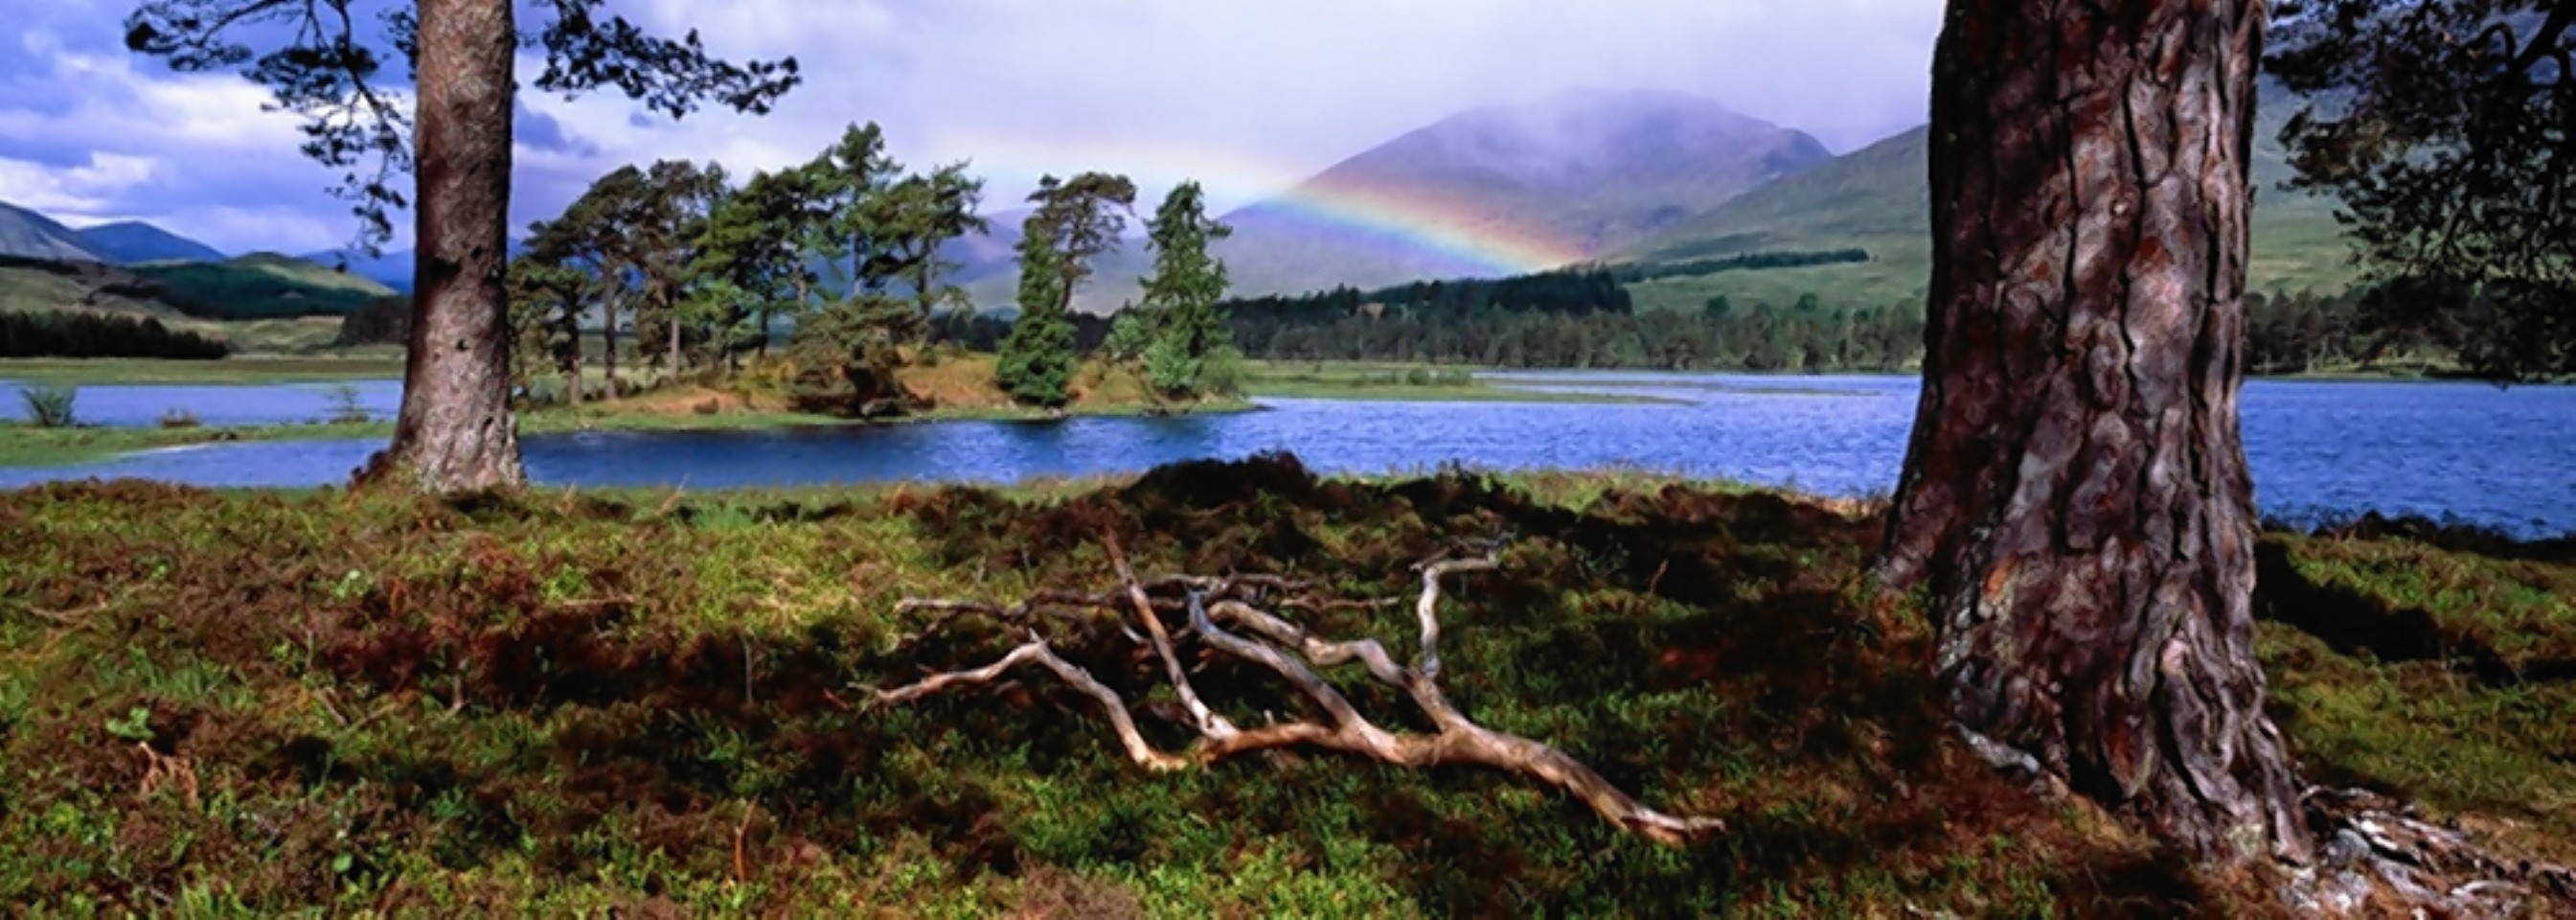 Visit Scotland photographic awards: Rainbow over Loch Tulla by Craig Aitchison